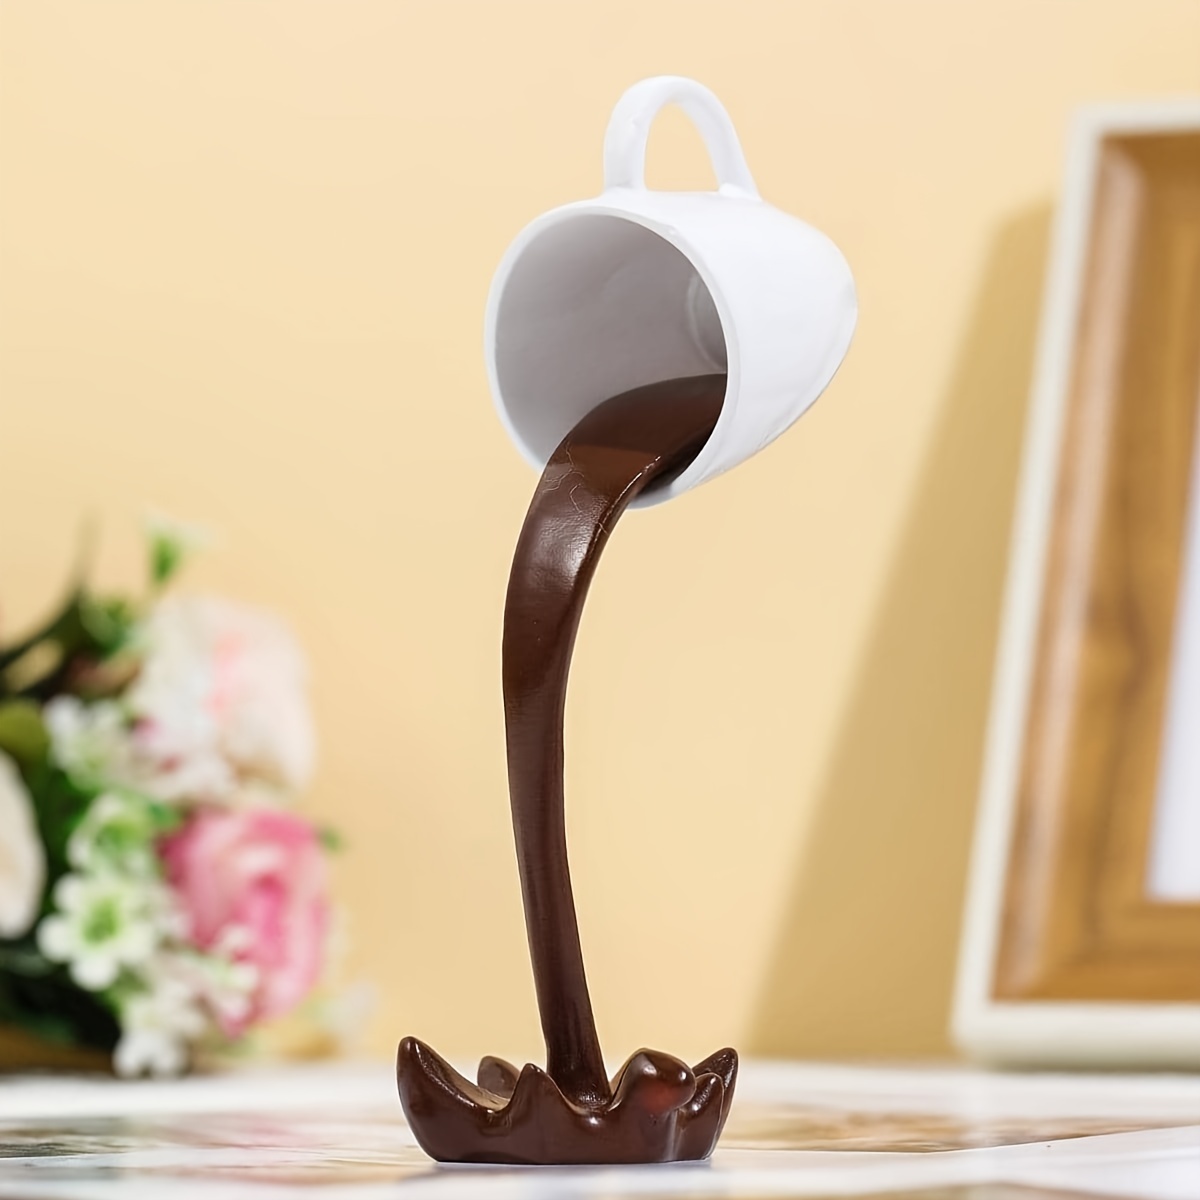 Floating Coffee Cup Sculptures Pouring Liquid Mug 3D Art Ornaments